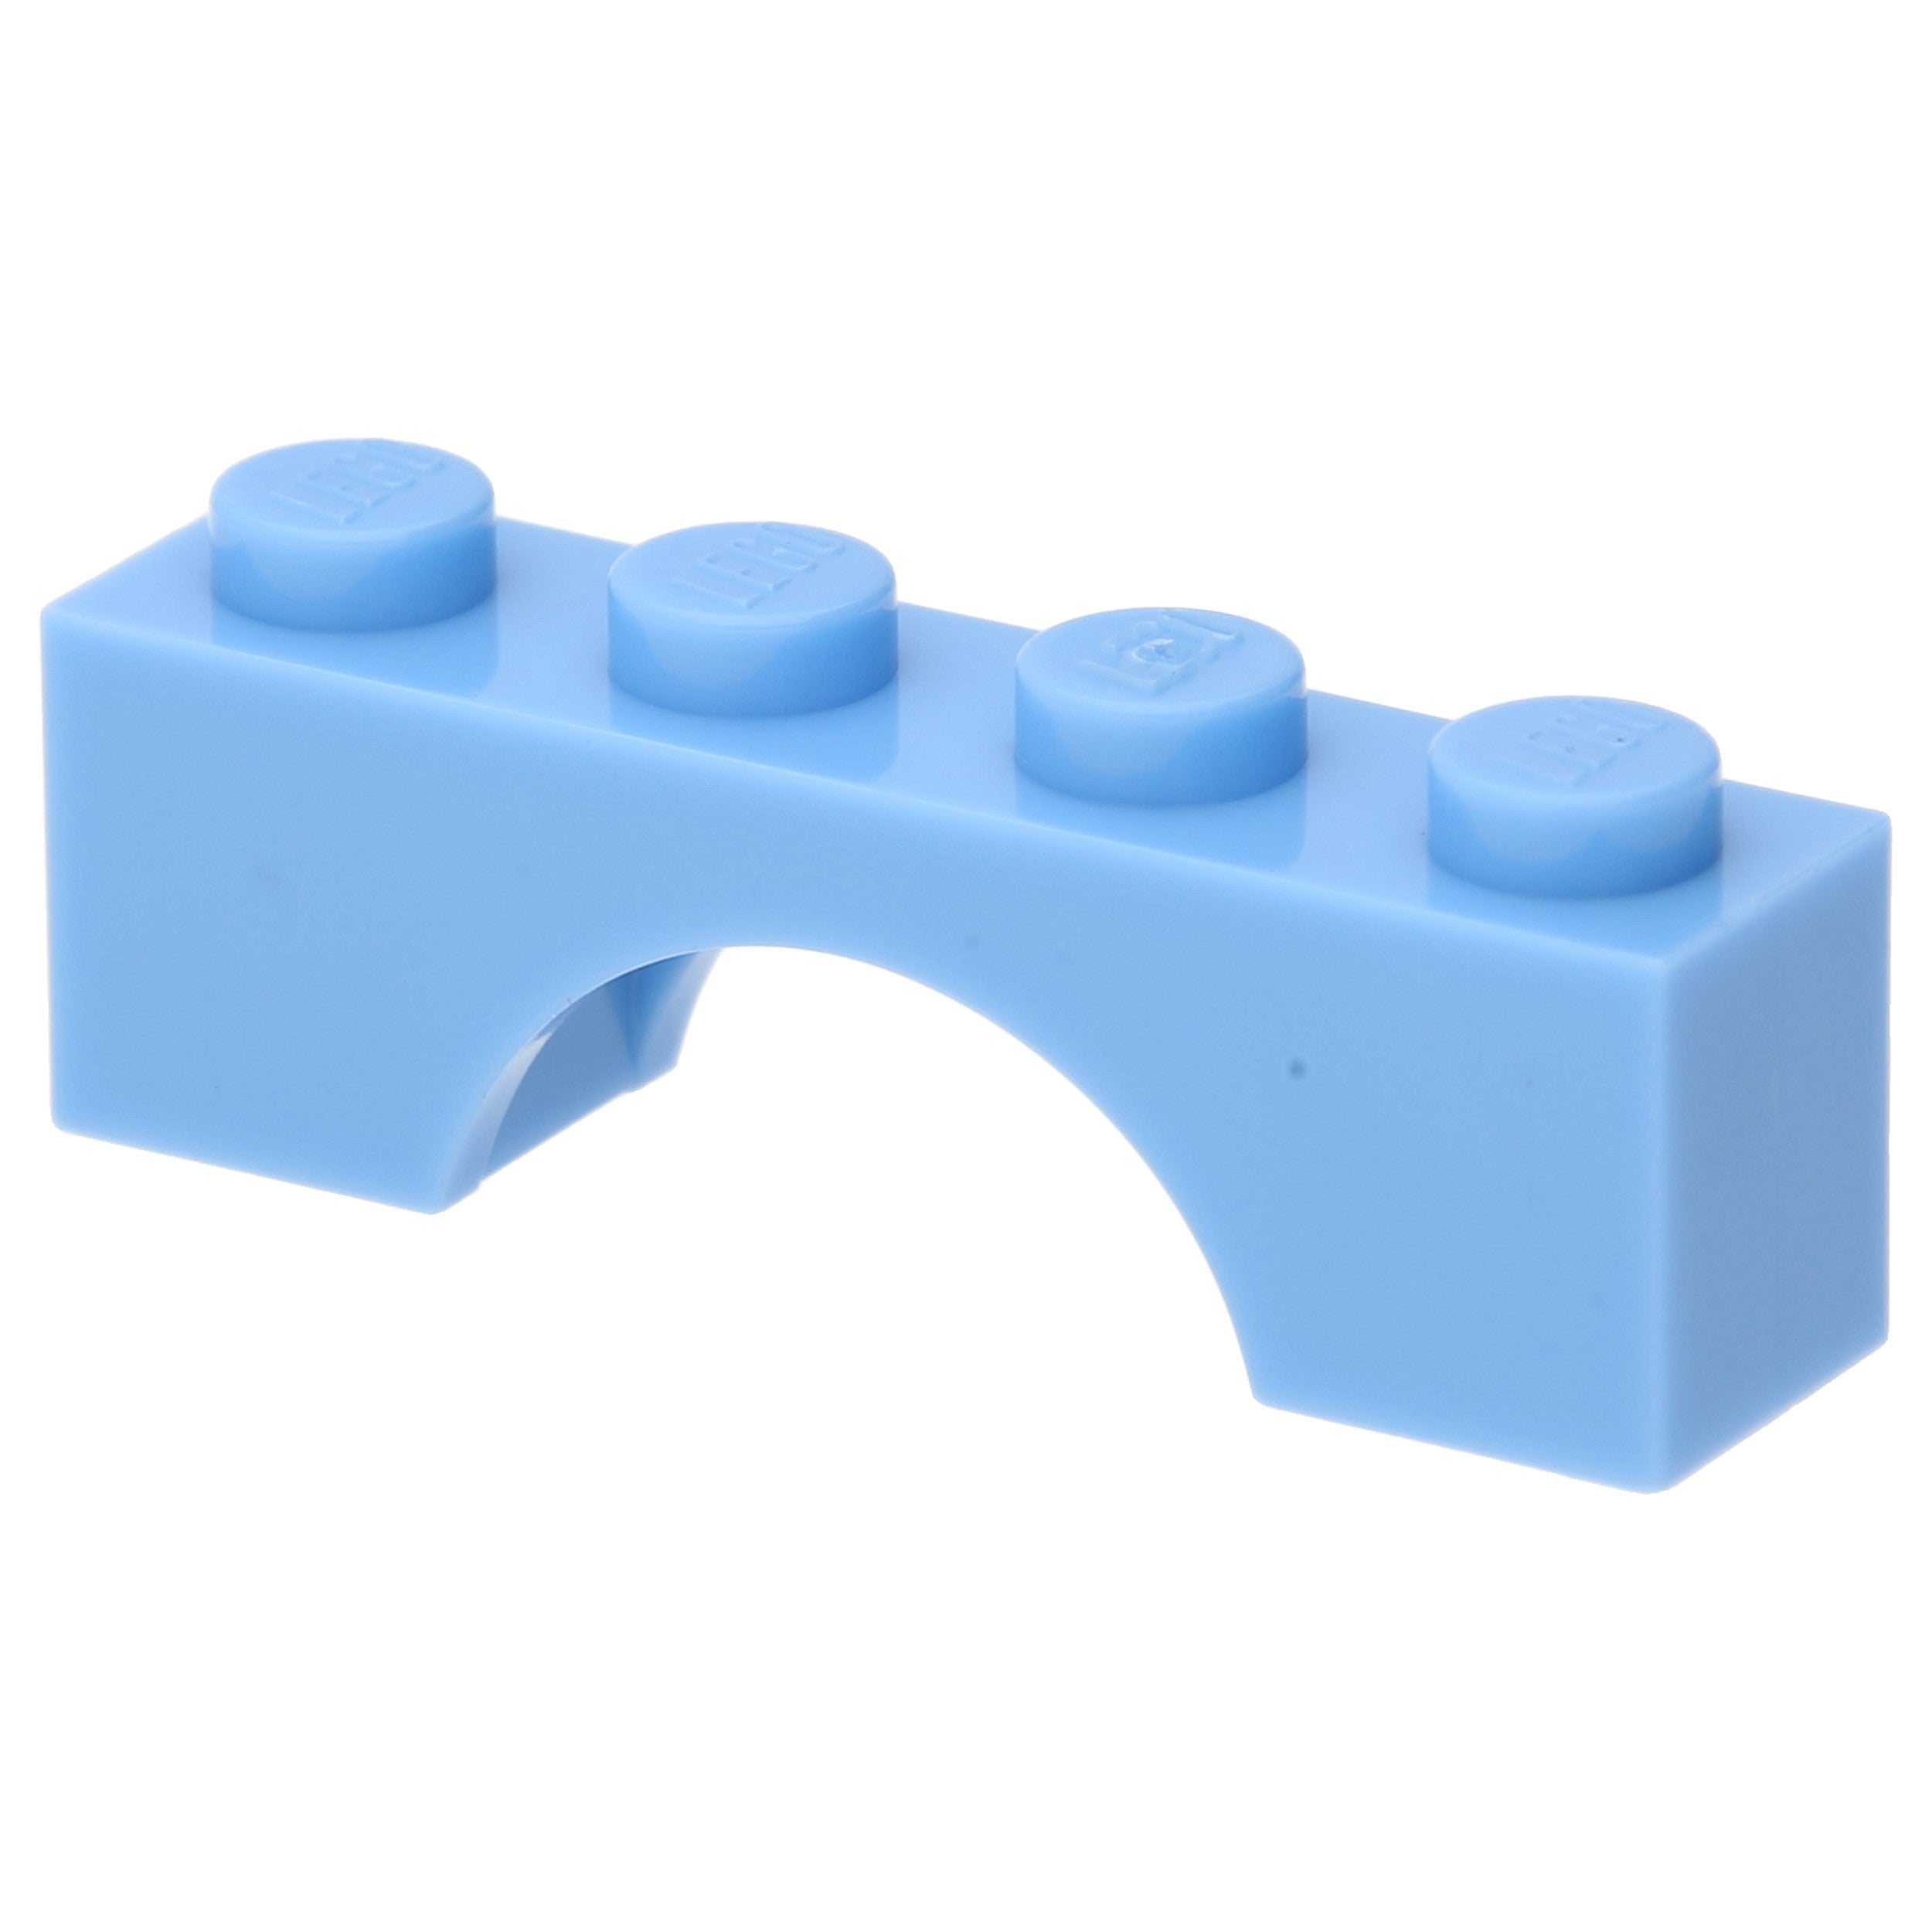 LEGO arch stones - 1 x 4